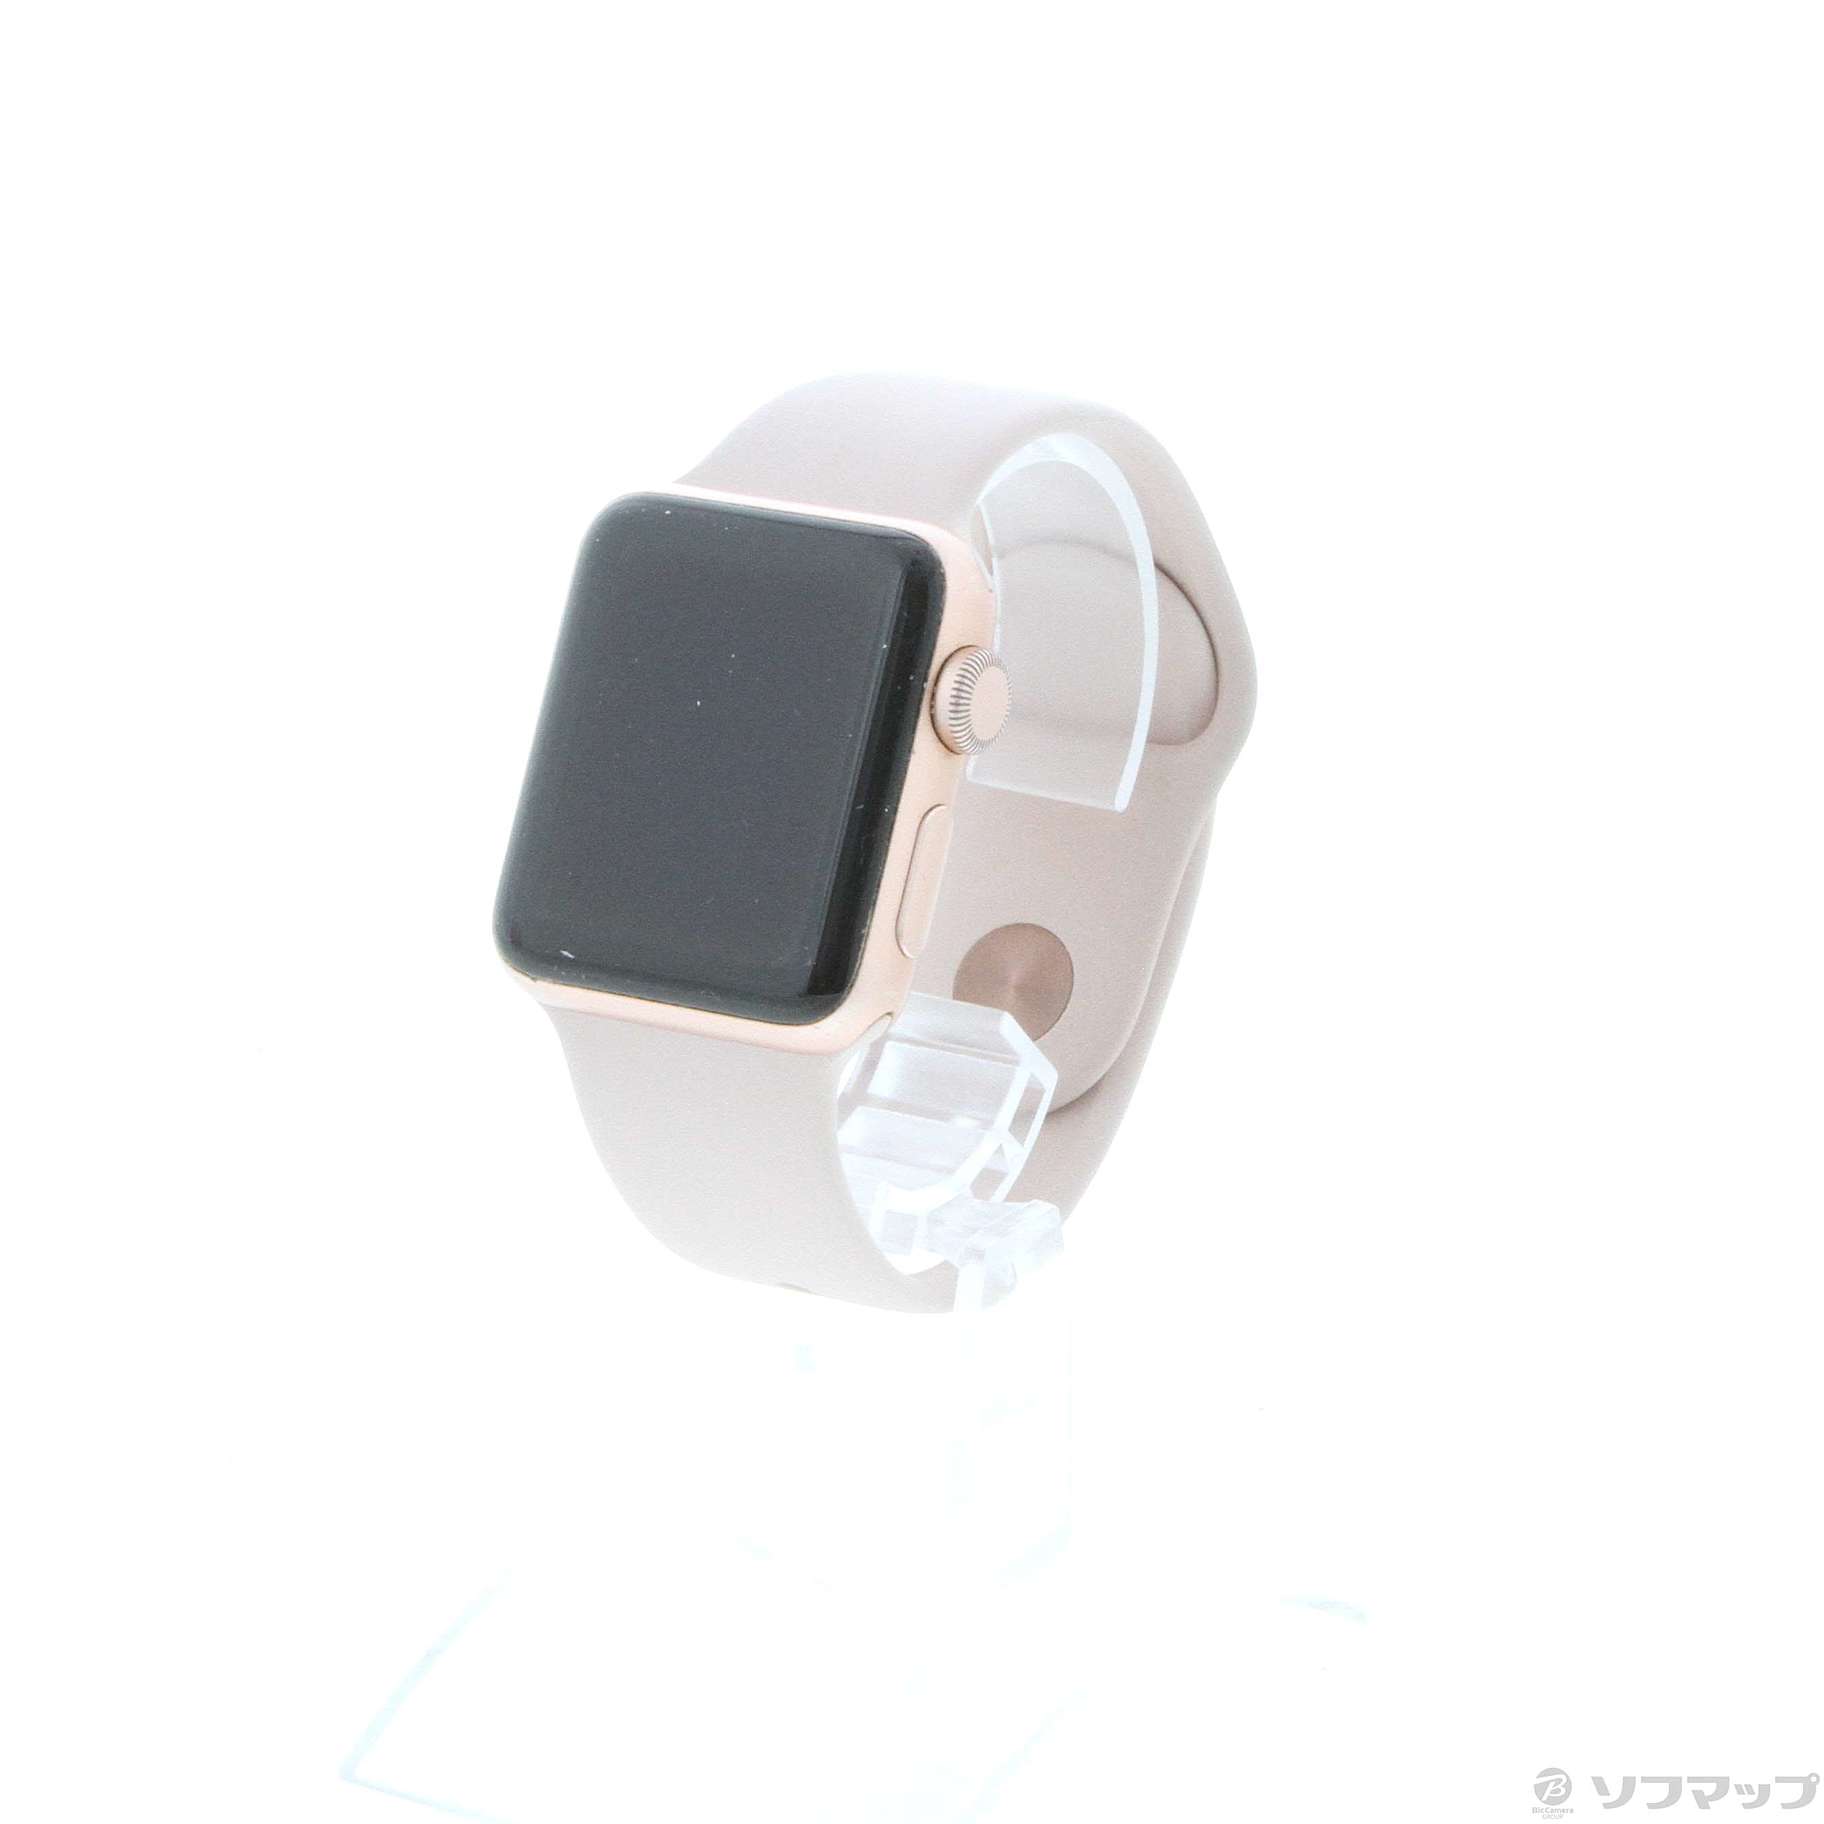 Apple Watch アップルウォッチ Series3 38mm A1858 - 腕時計